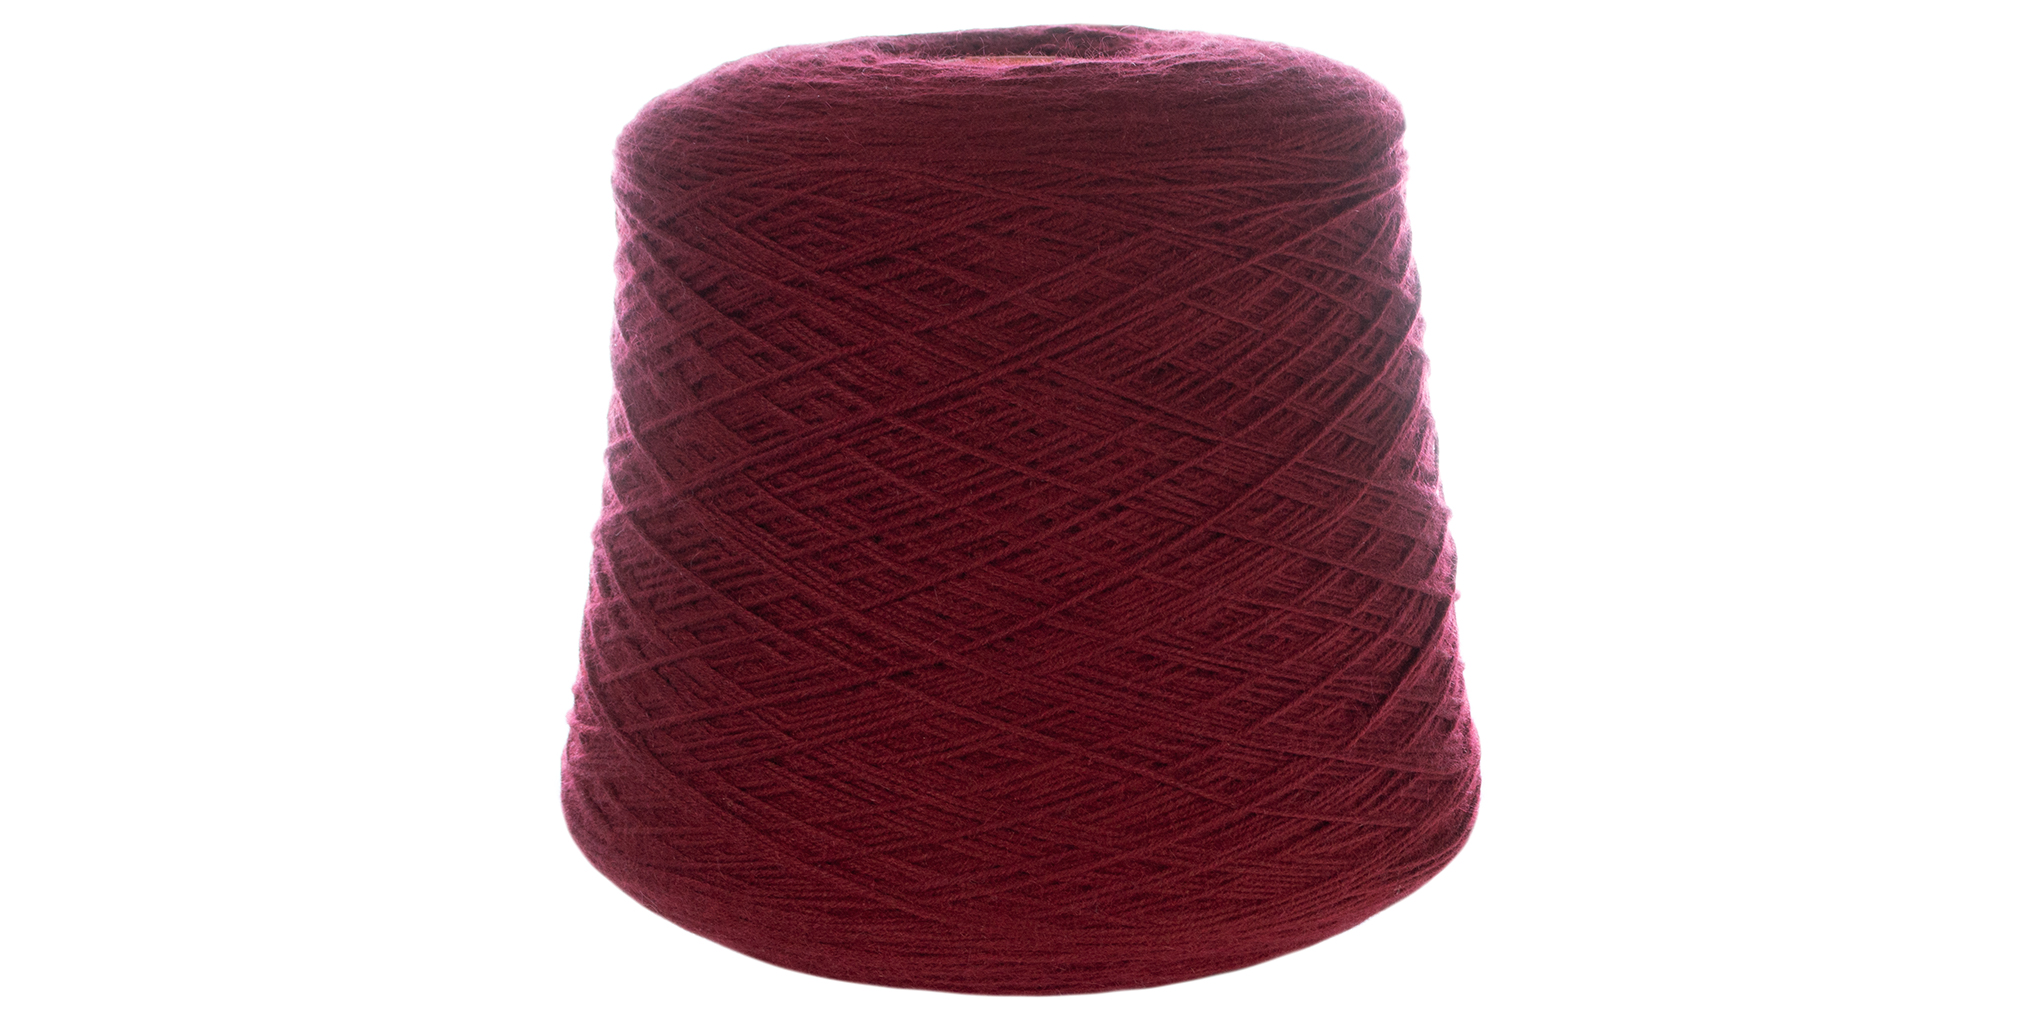 angola cashmere yarn